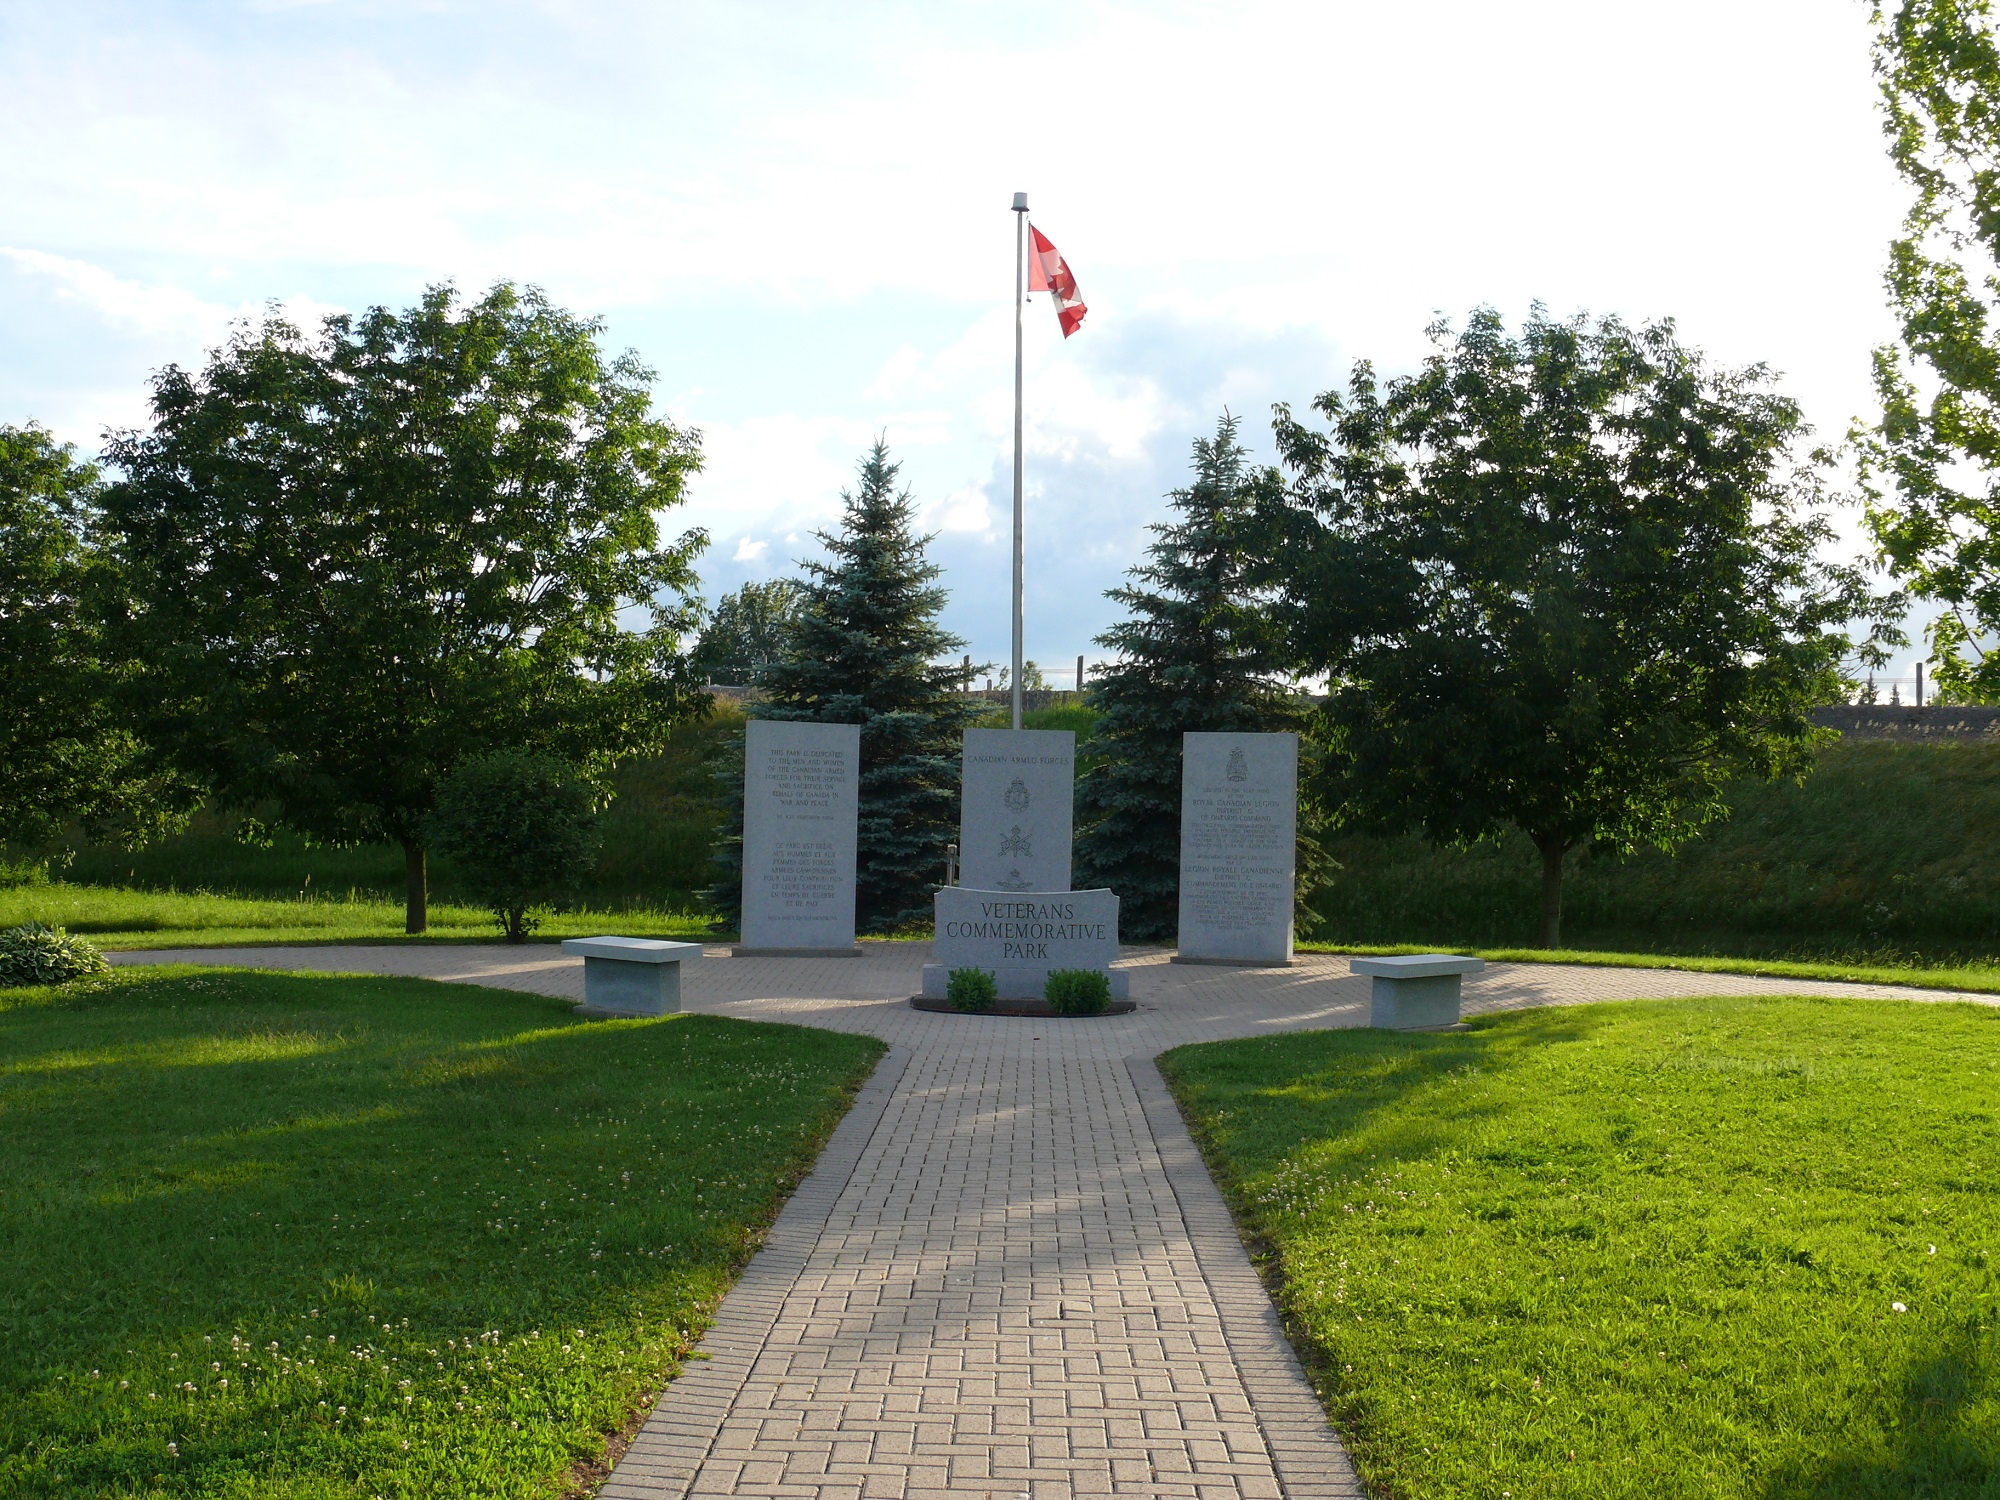 Veterans Commemorative Park